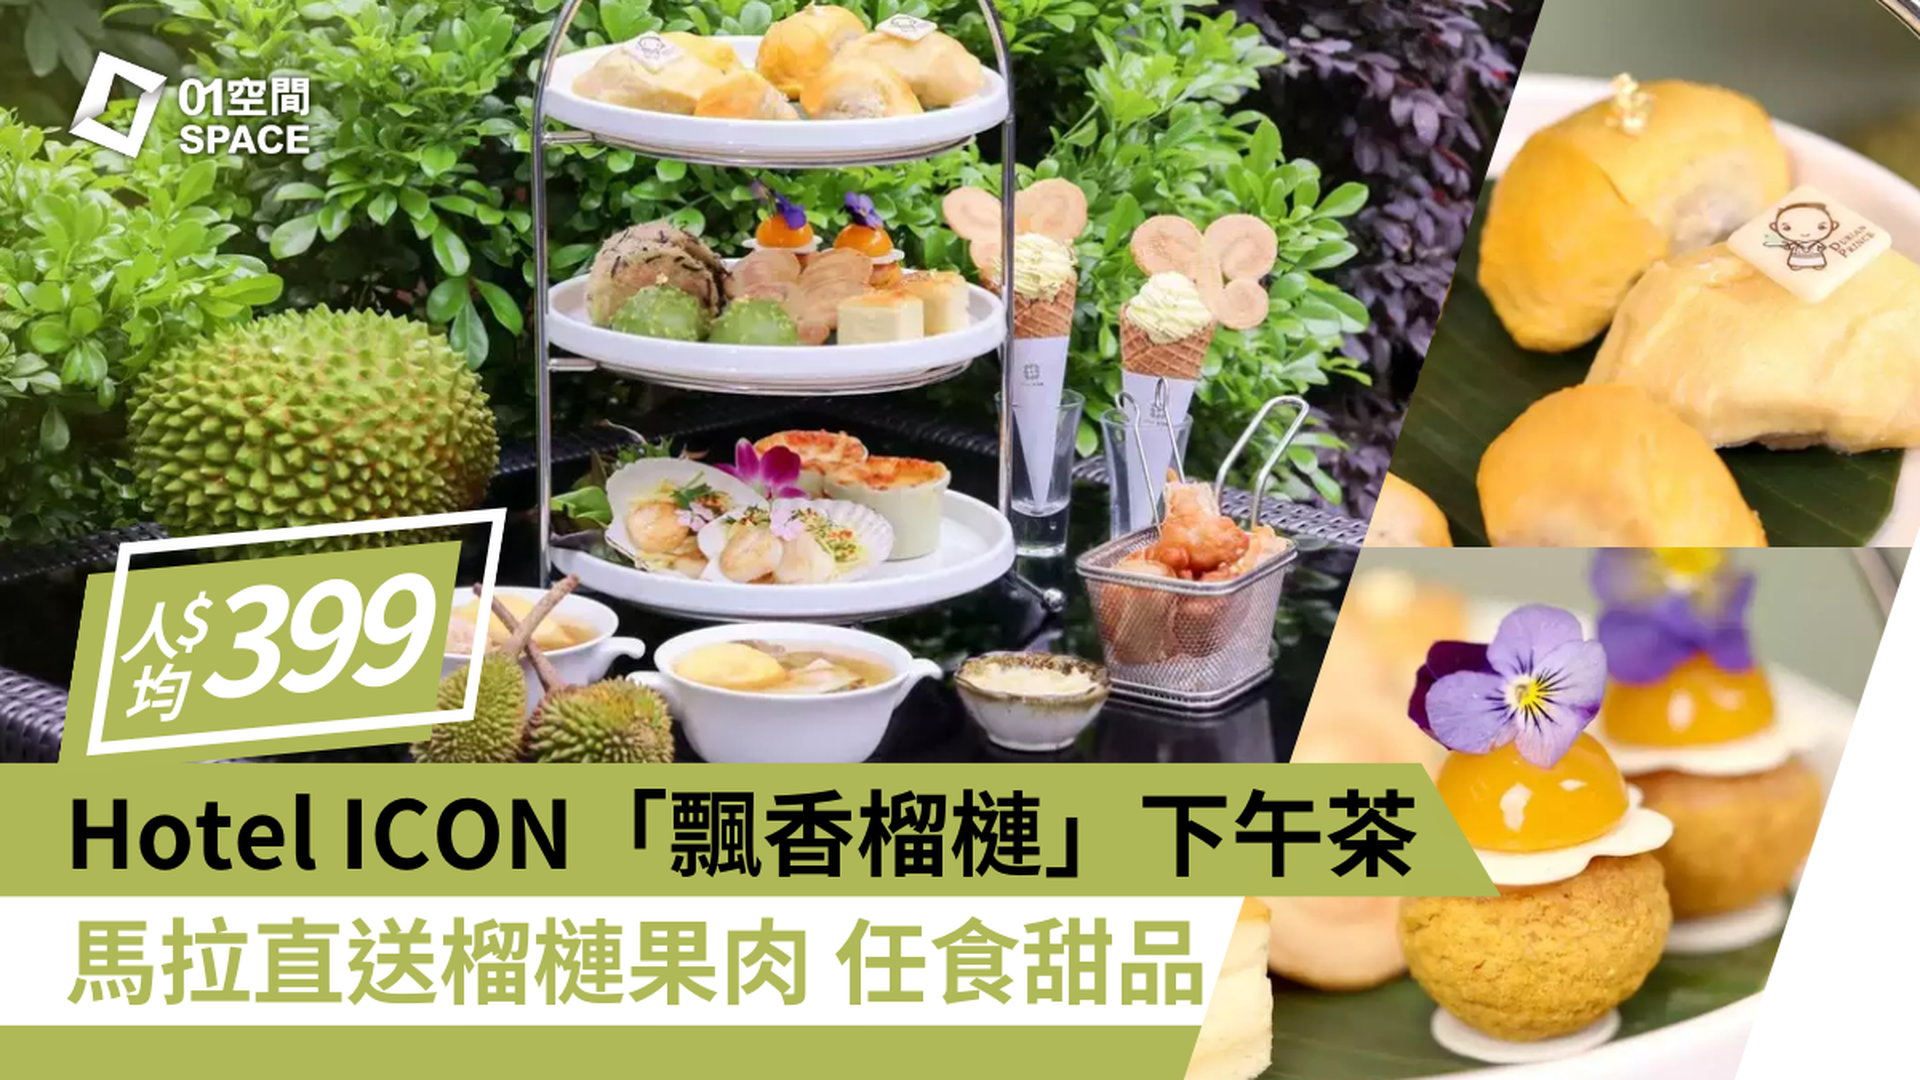 唯港薈 Hotel ICON｜「飄香榴槤」下午茶｜THE MARKET｜人均$399